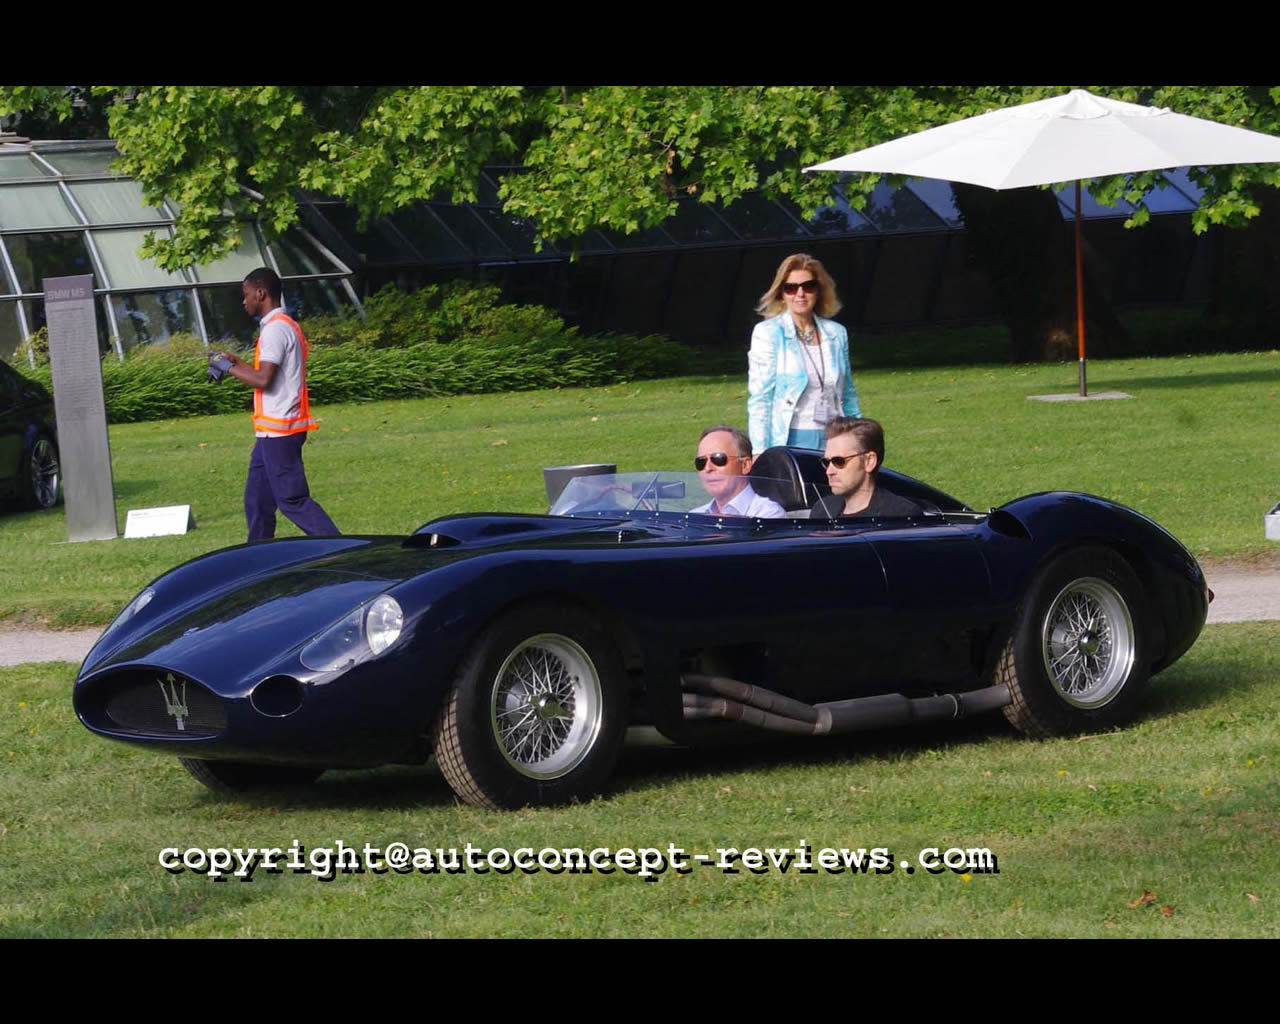 http://www.autoconcept-reviews.com/cars_reviews/maserati/Maserati-450S%20-sport-fantuzzi%20-1956/wallpapers/1%20-%20Maserati%20450S%201956.jpg